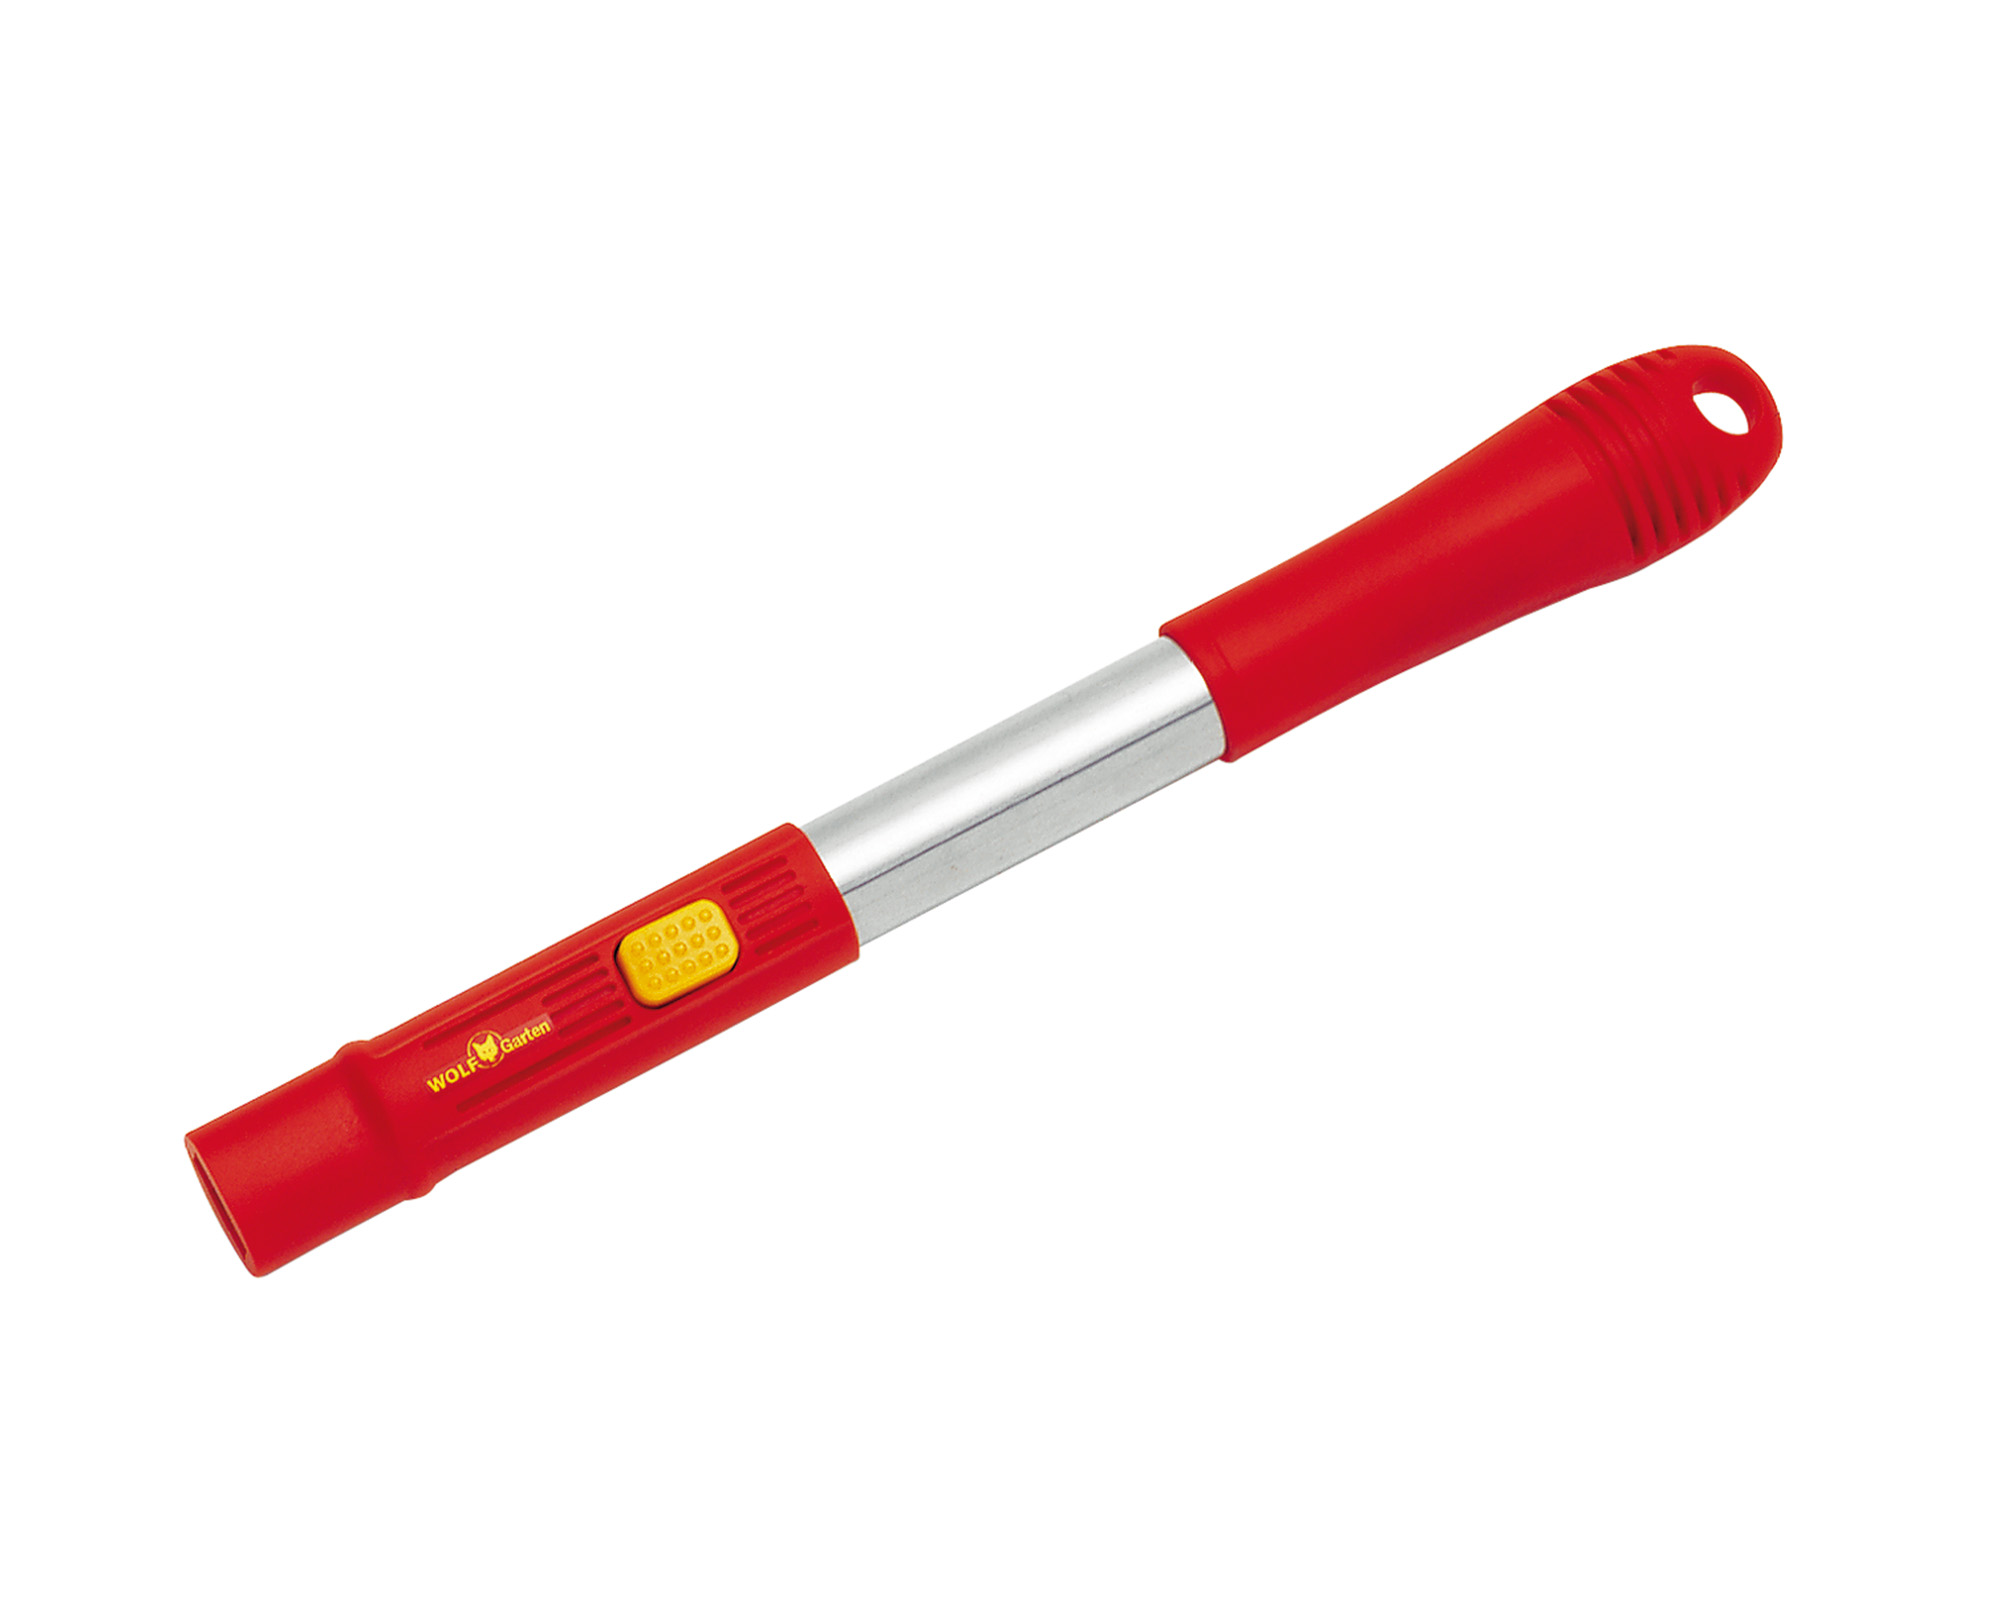 ZM04 (35cm) handle - alternative short aluminium handle to use with push pull weeder RF_M